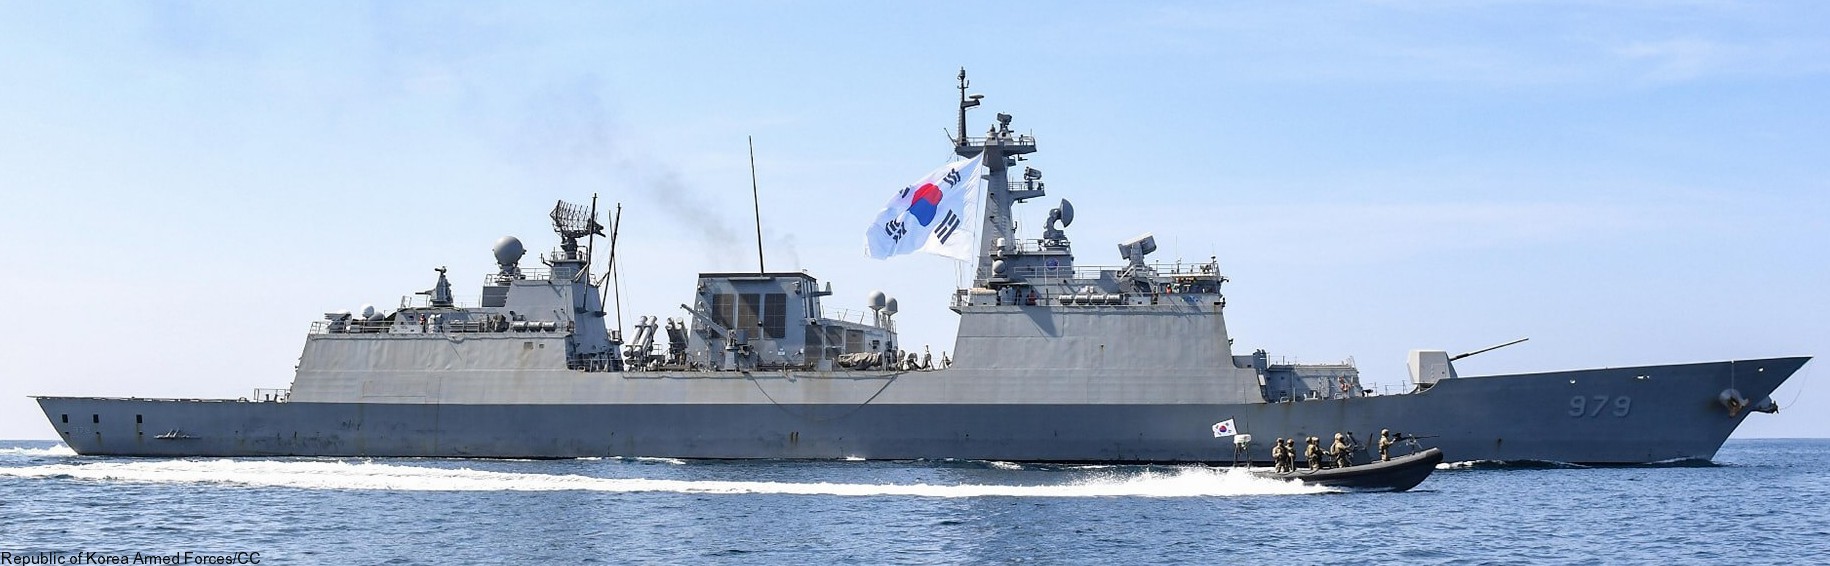 ddh-979 roks gang gam-chan chungmugong yi sun-sin class destroyer korean navy rokn 03c